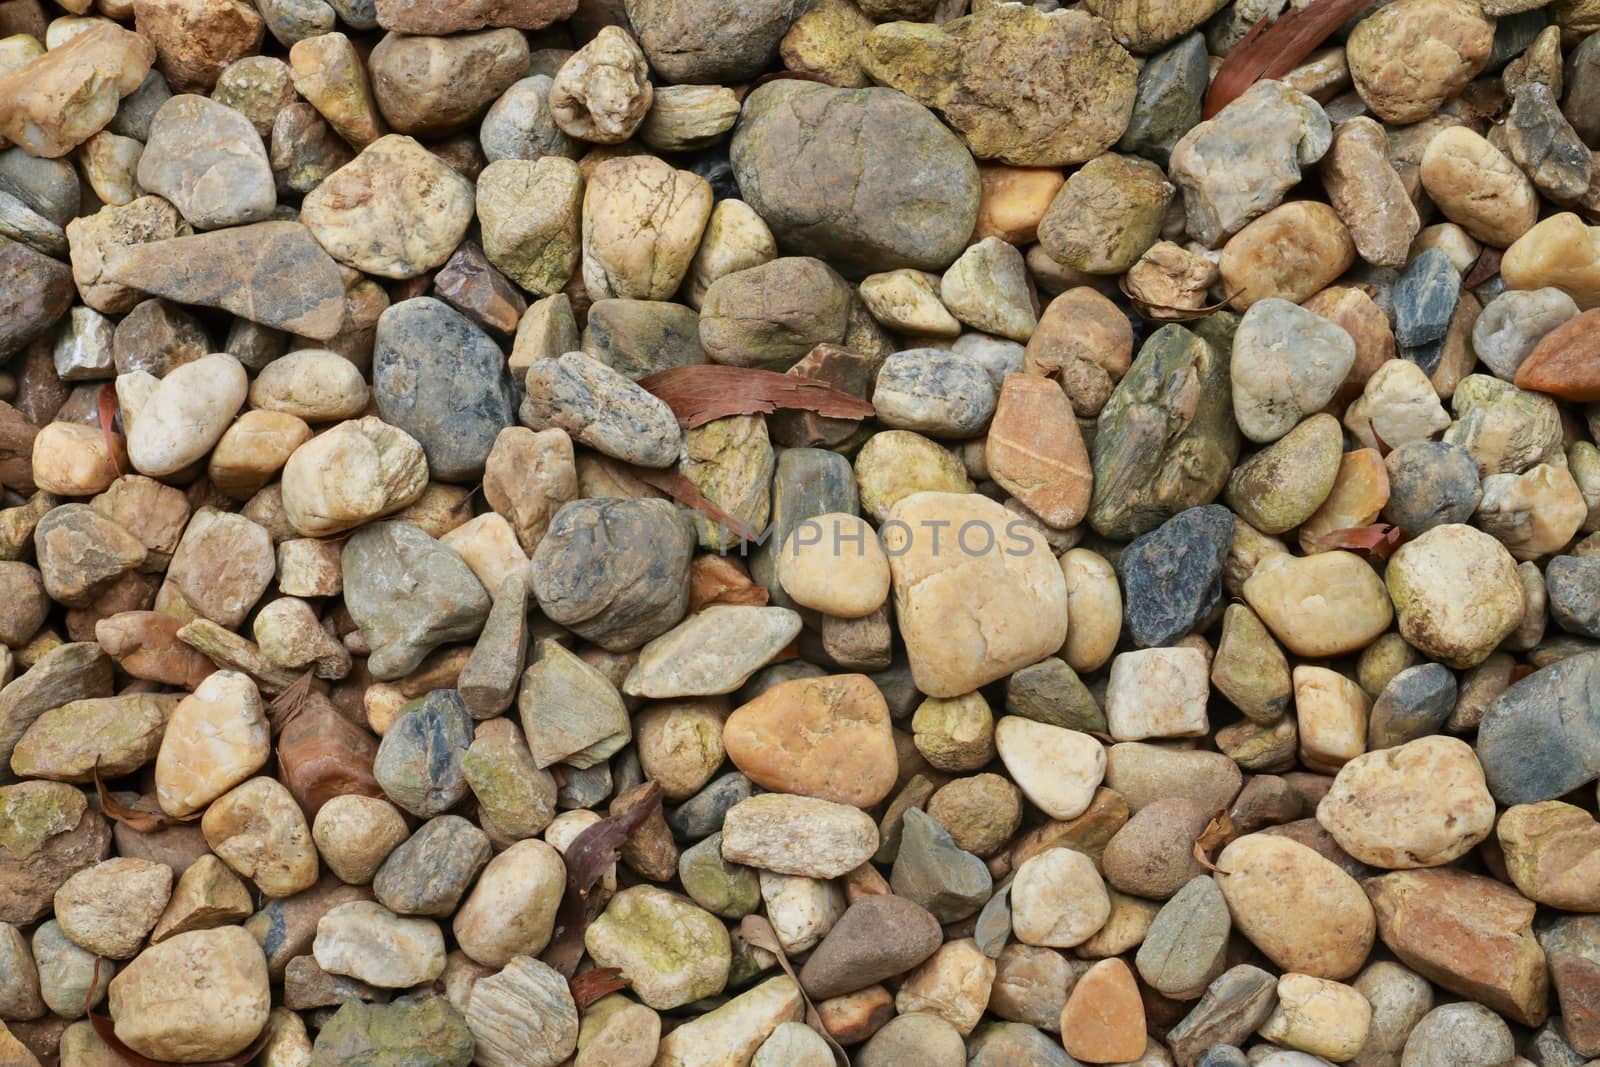 Image of walkway made of pebbles.